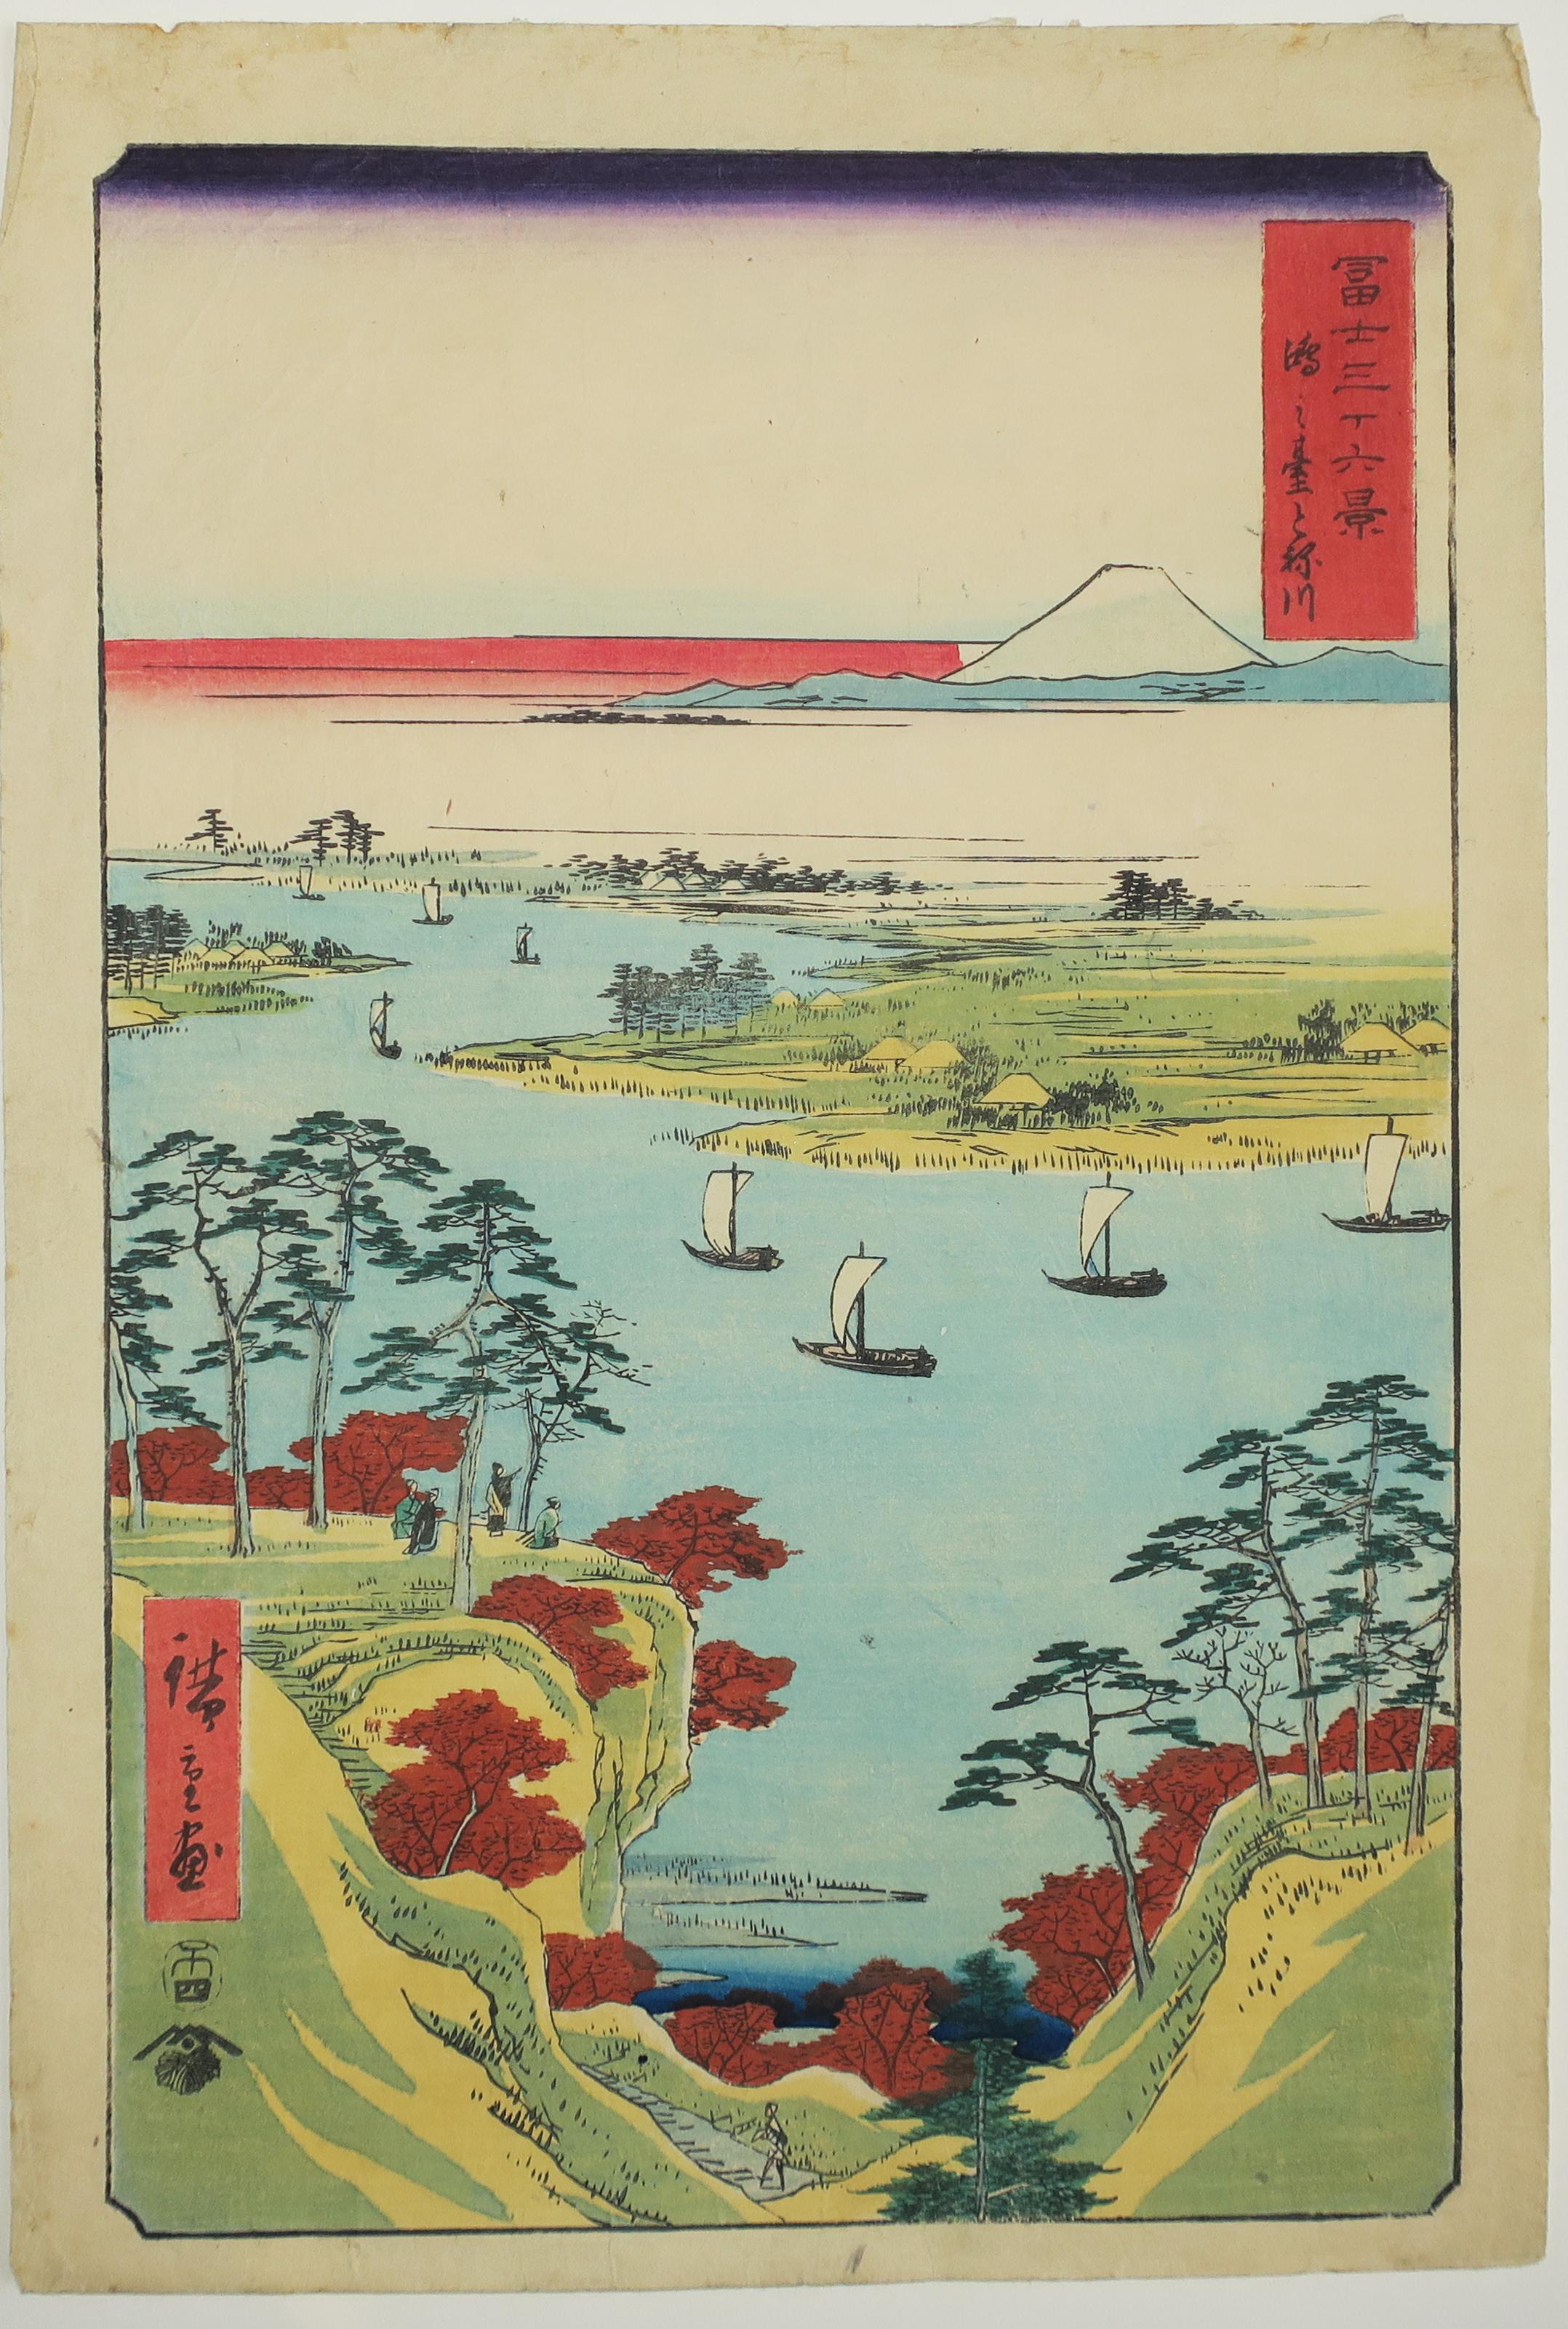 Utagawa Hiroshige (Ando Hiroshige) Landscape Print - Konodai Tonegawa, colline de l'Oie sauvage et la rivière Tone. 1858.